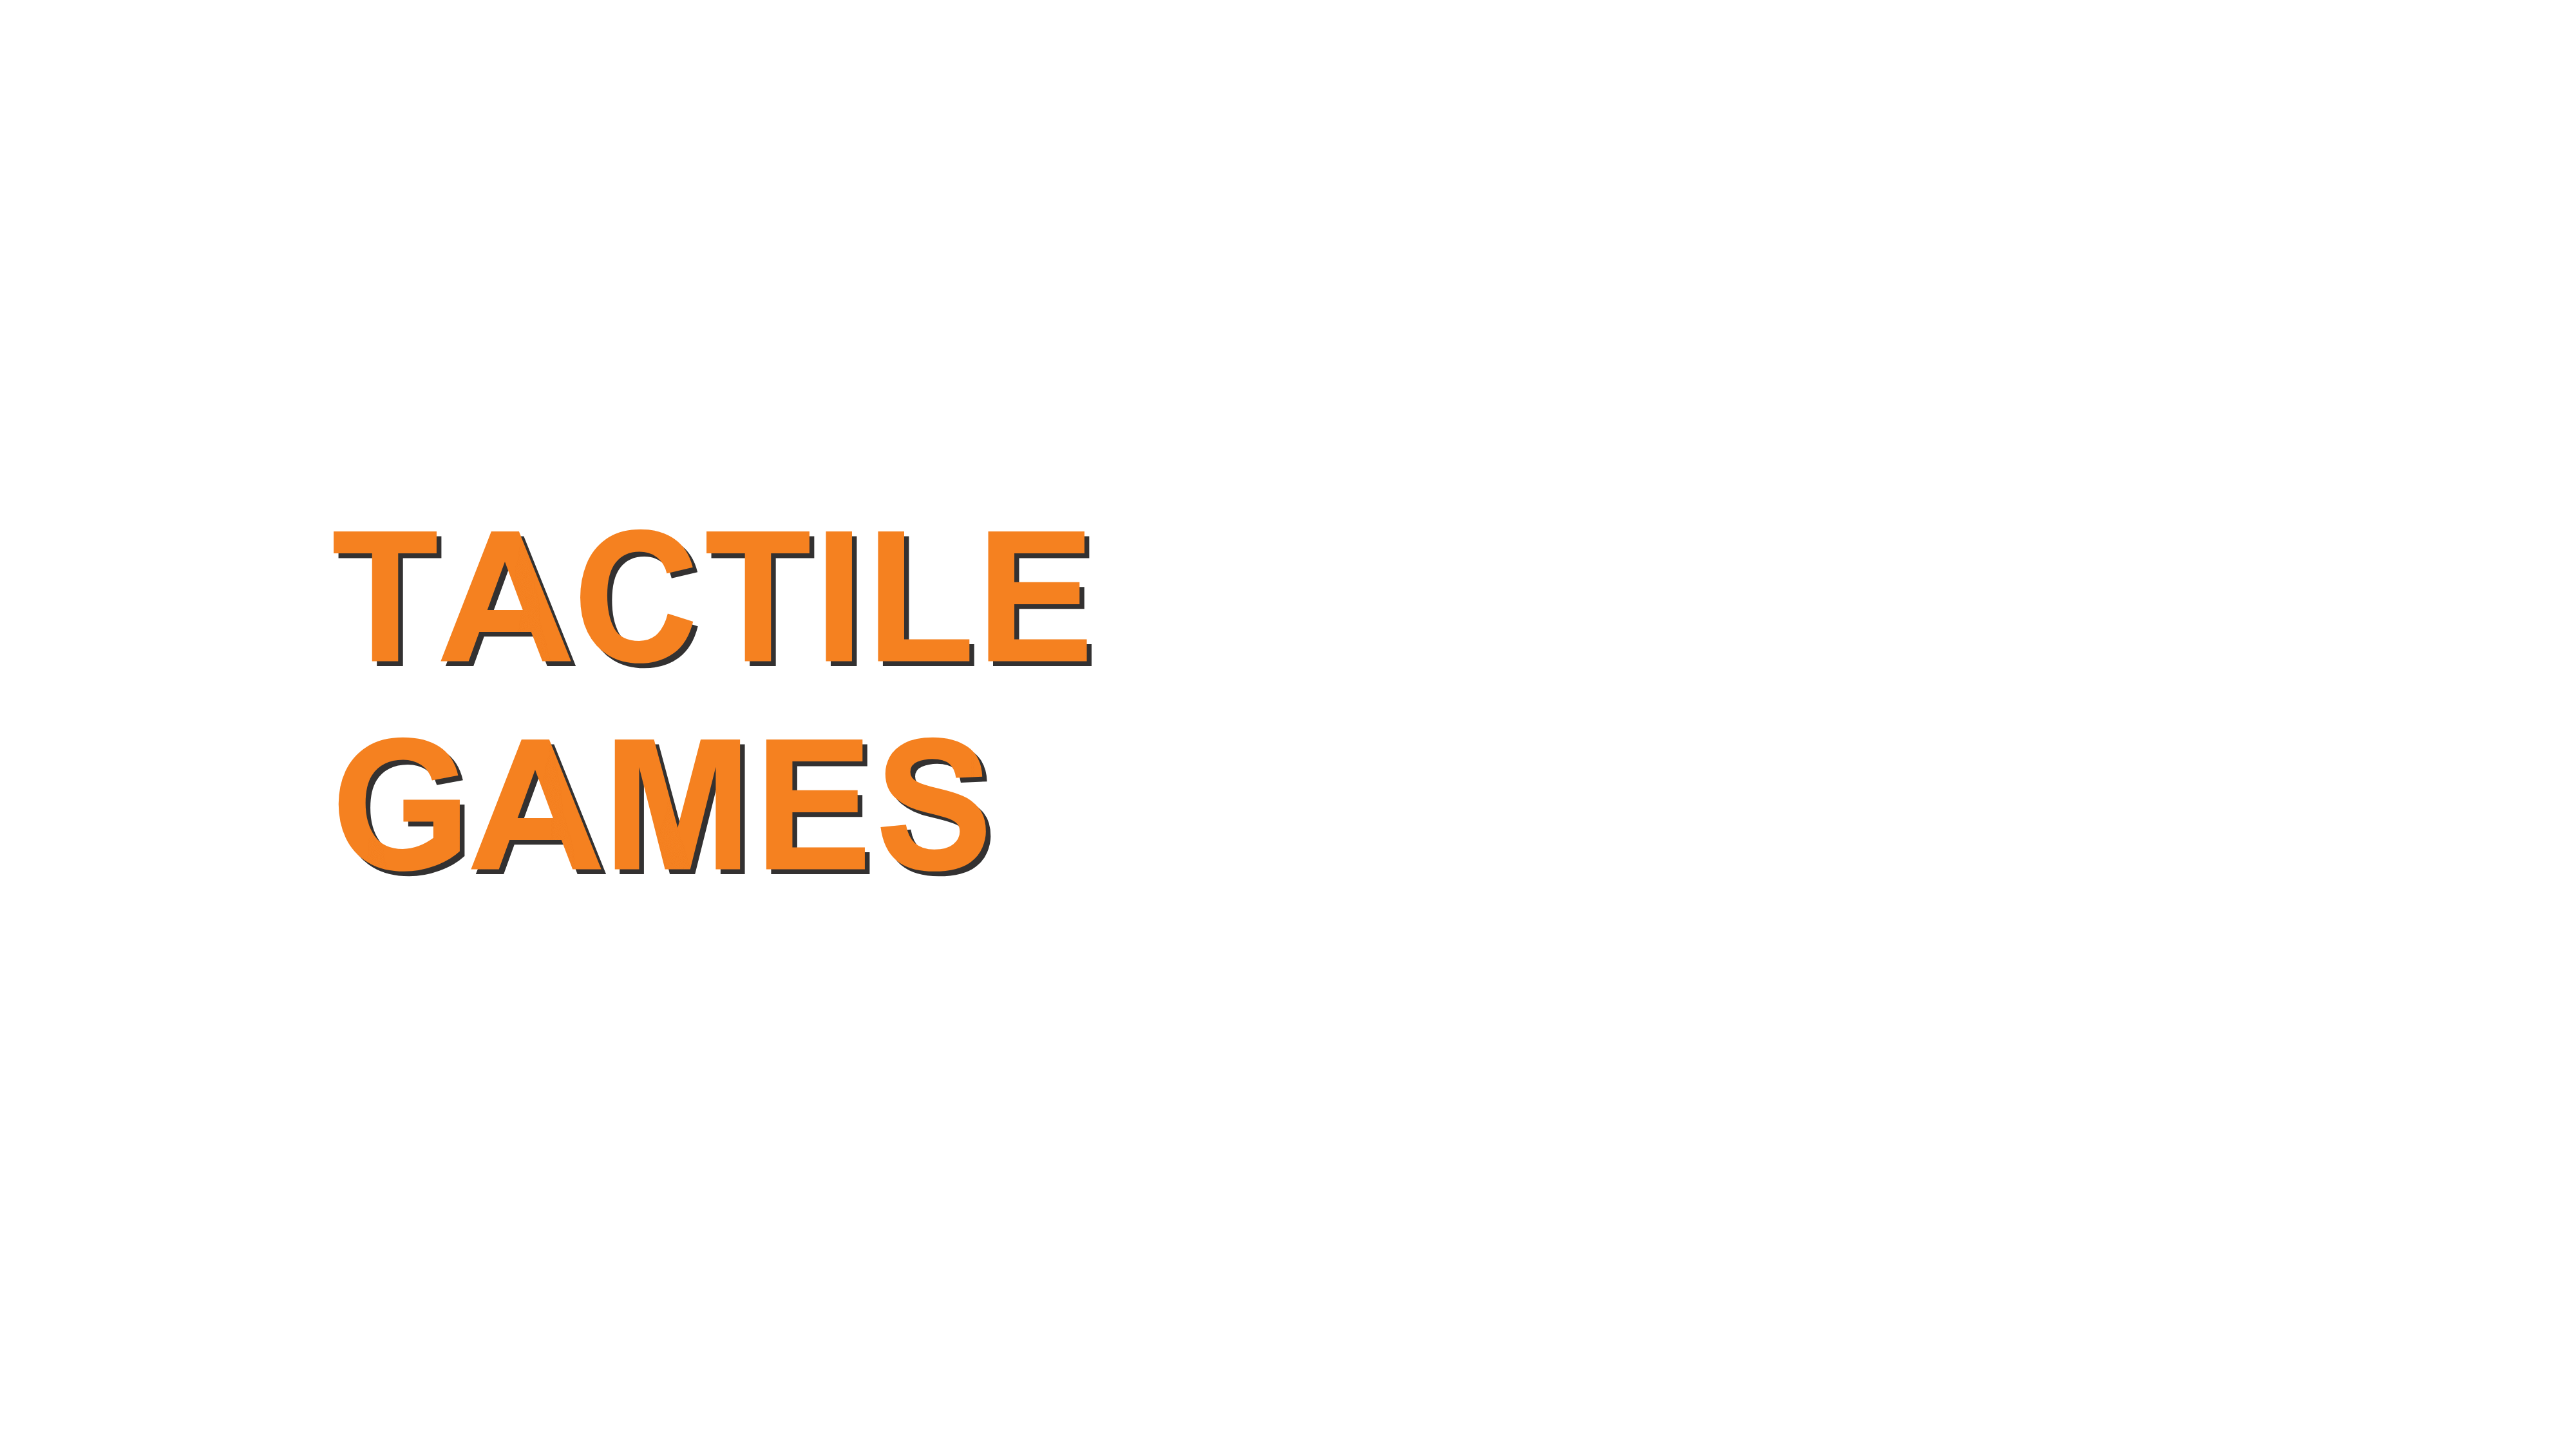 Tactile Games Text